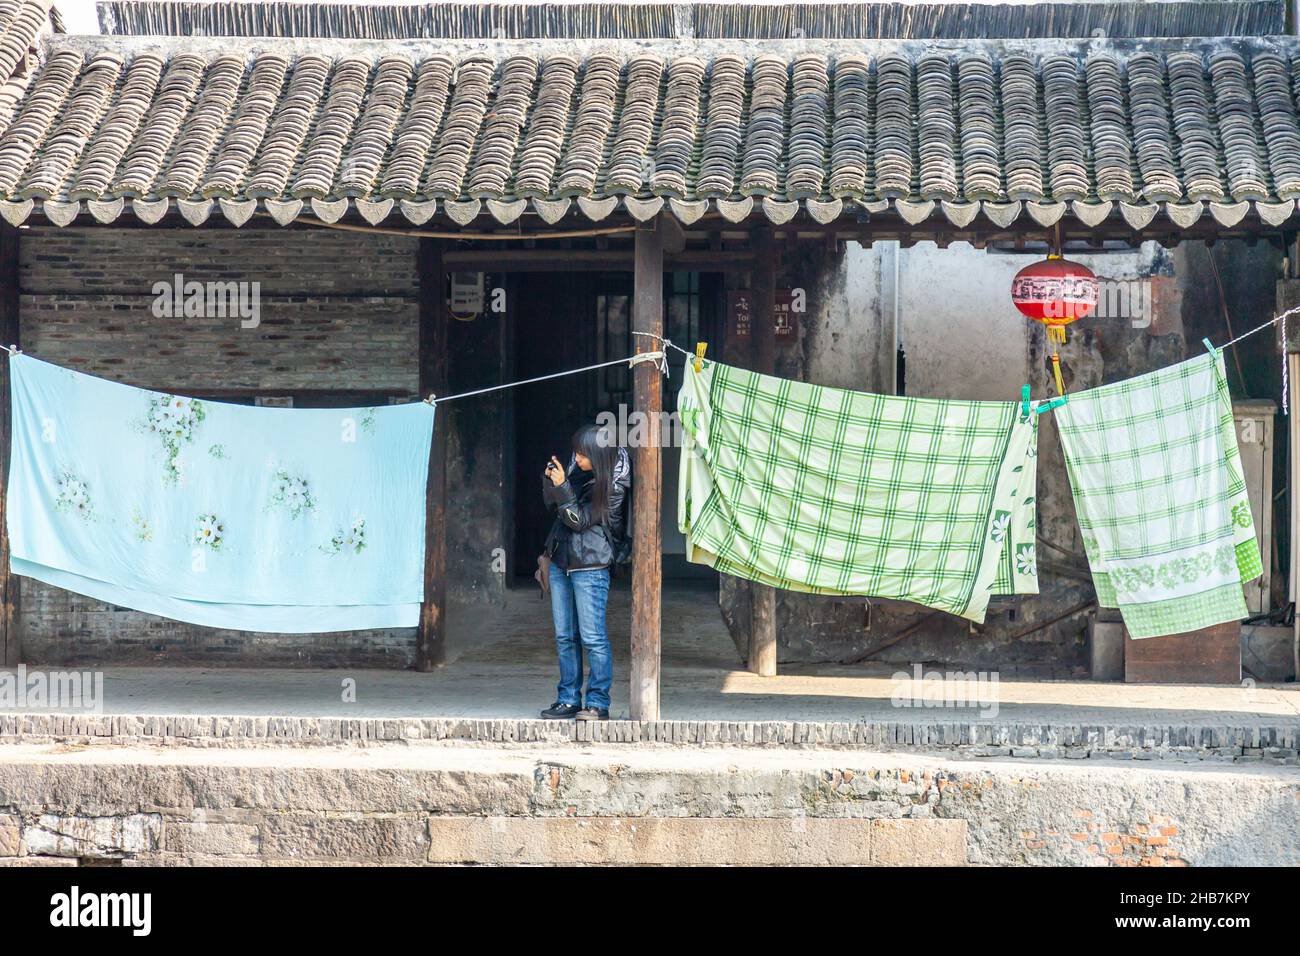 Lady photographing, laundry, red lantern. Xitang, China Stock Photo